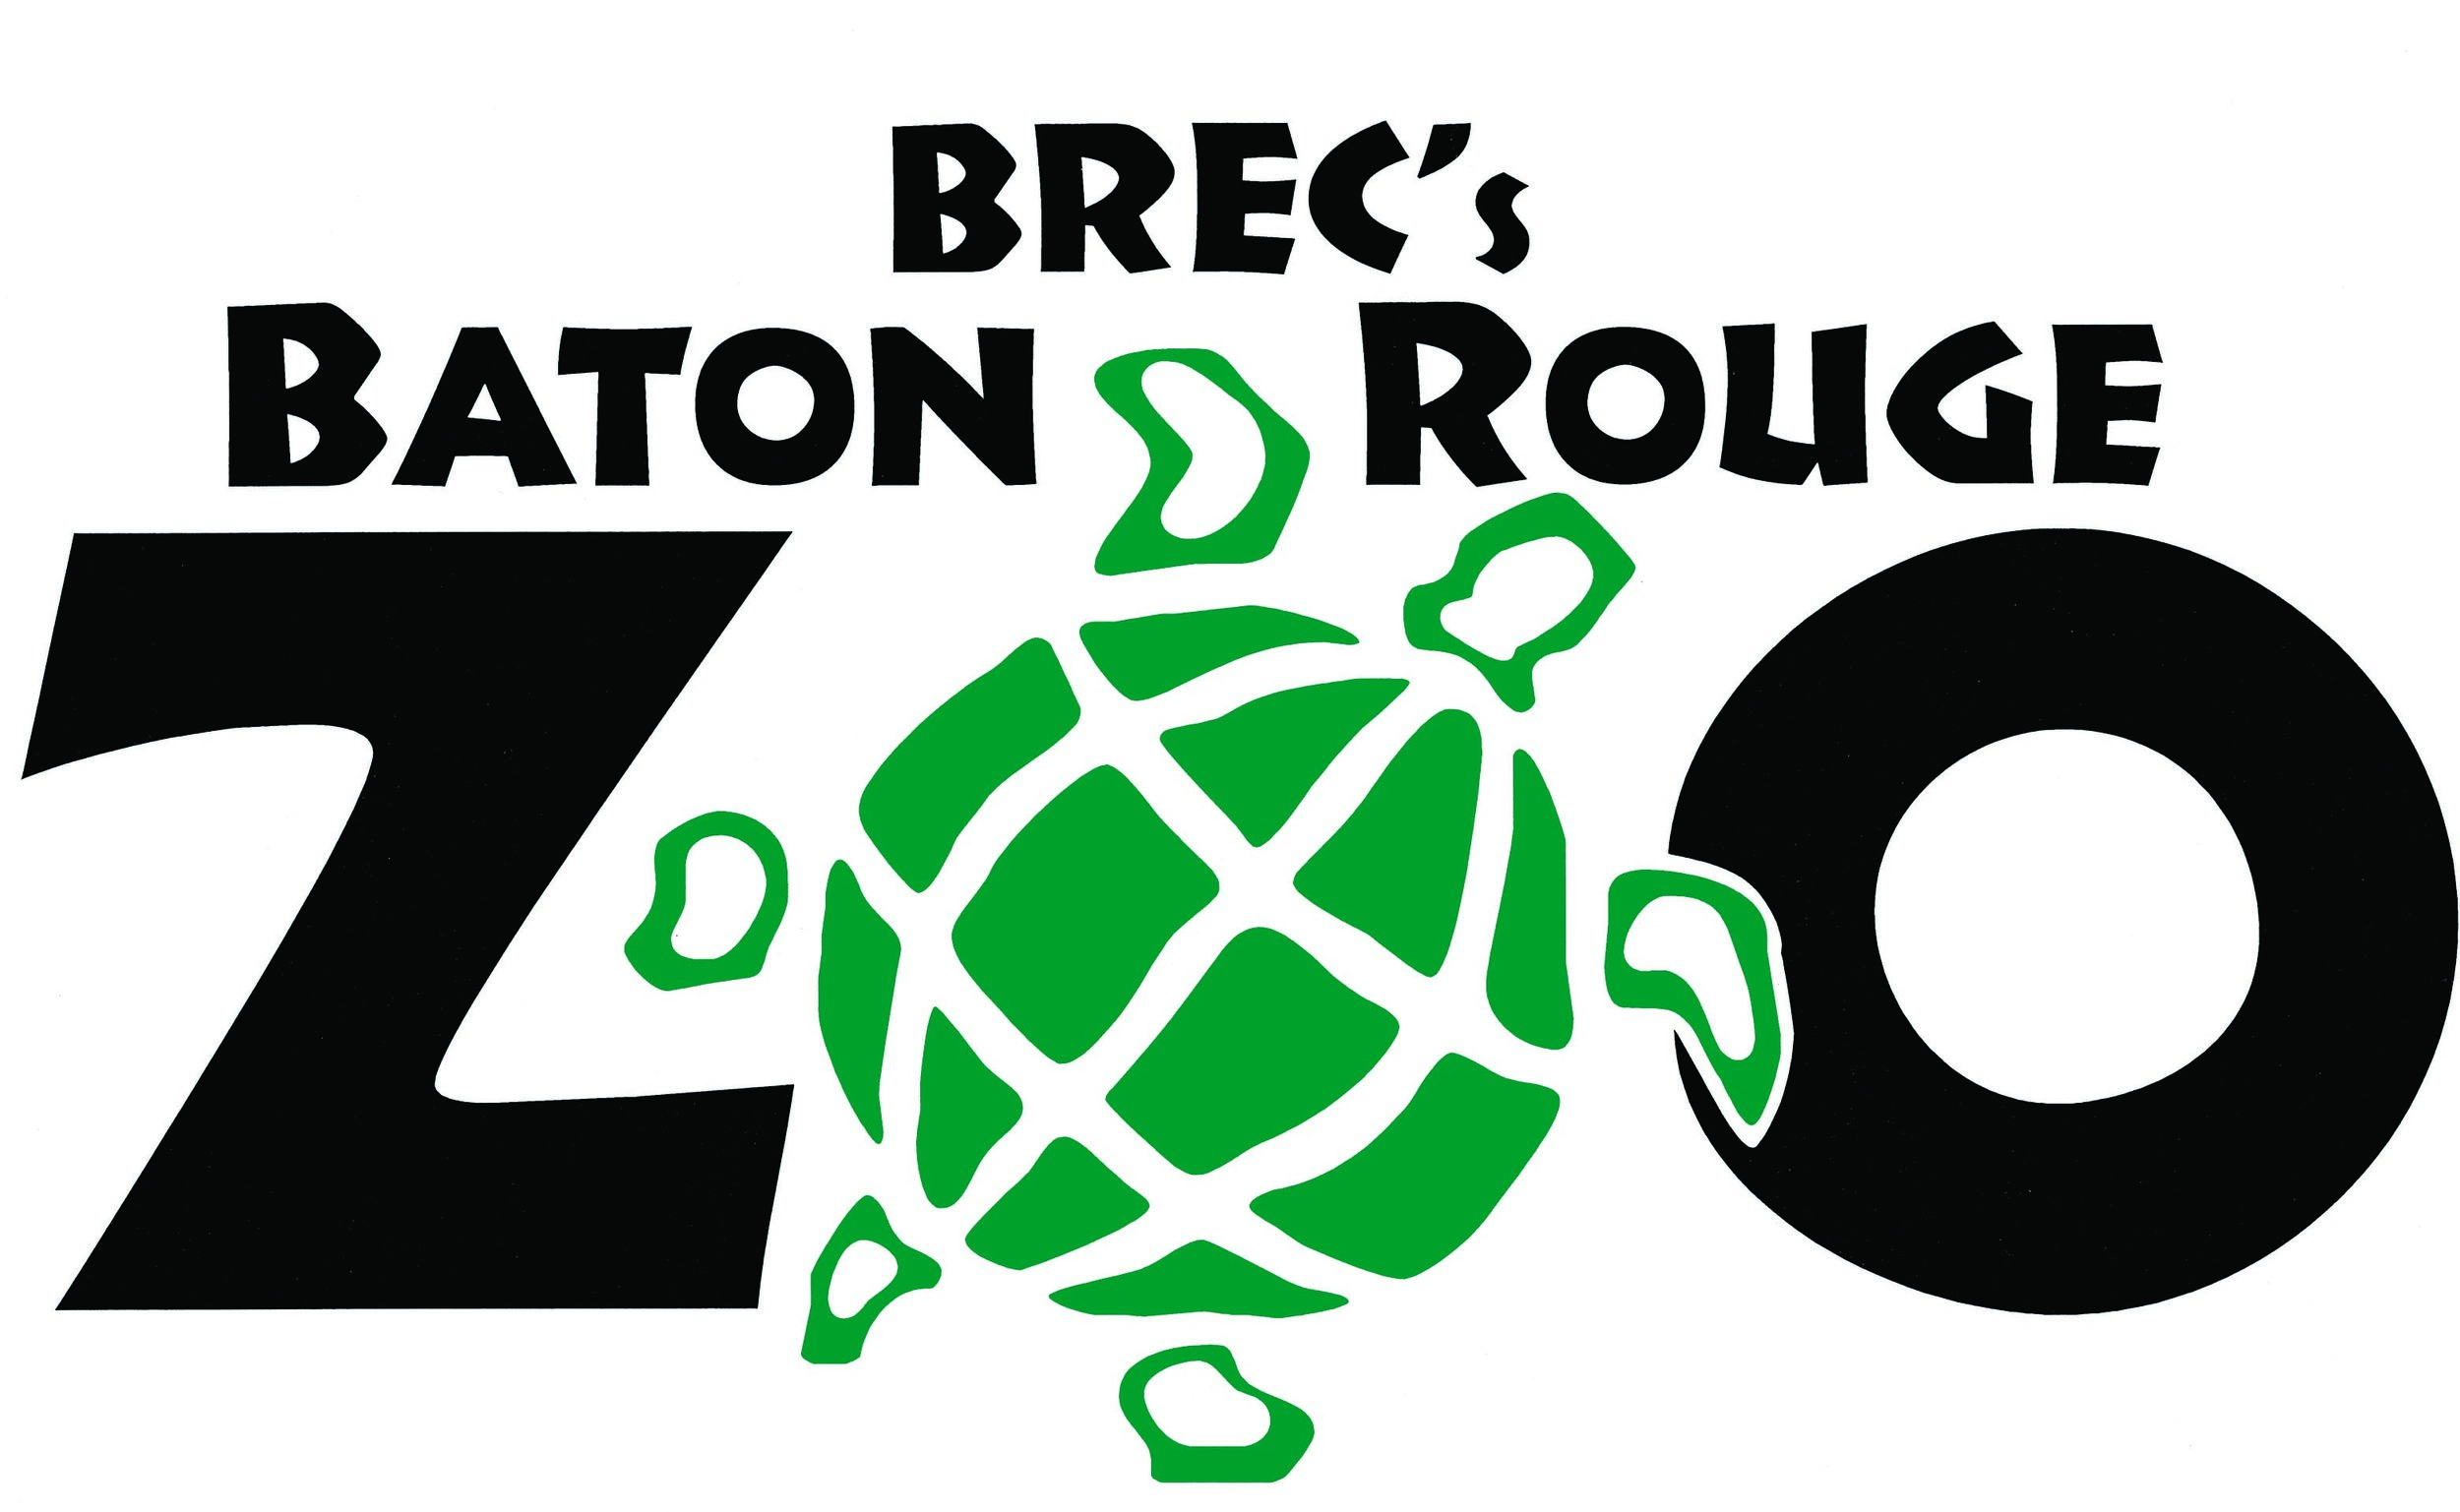 BREC's Baton Rouge Zoo.jpeg